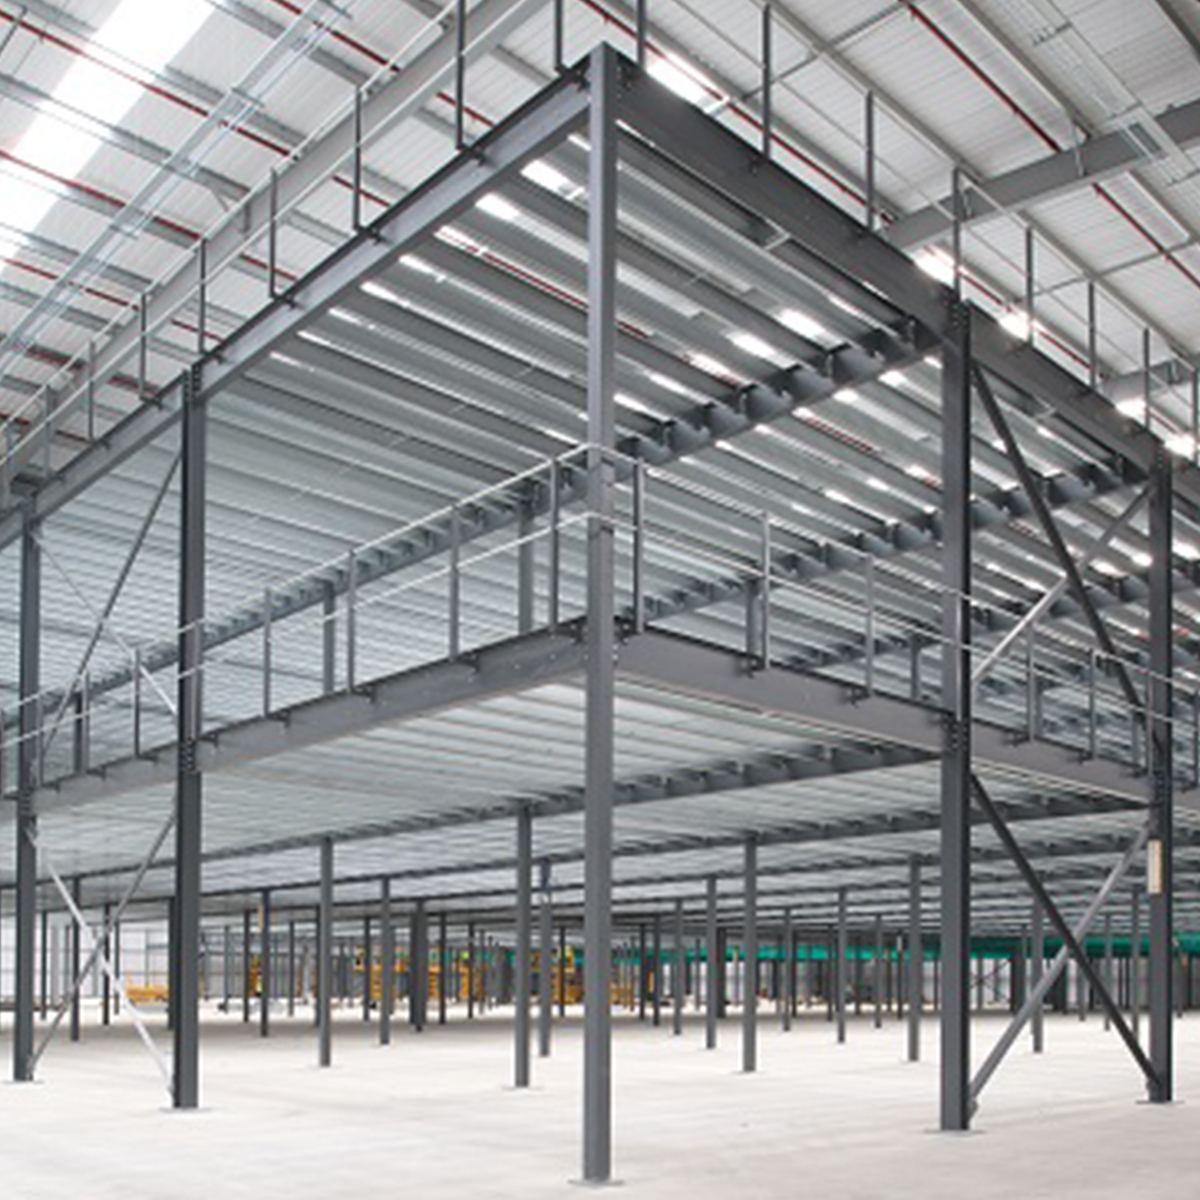 Digital plan for warehouse.